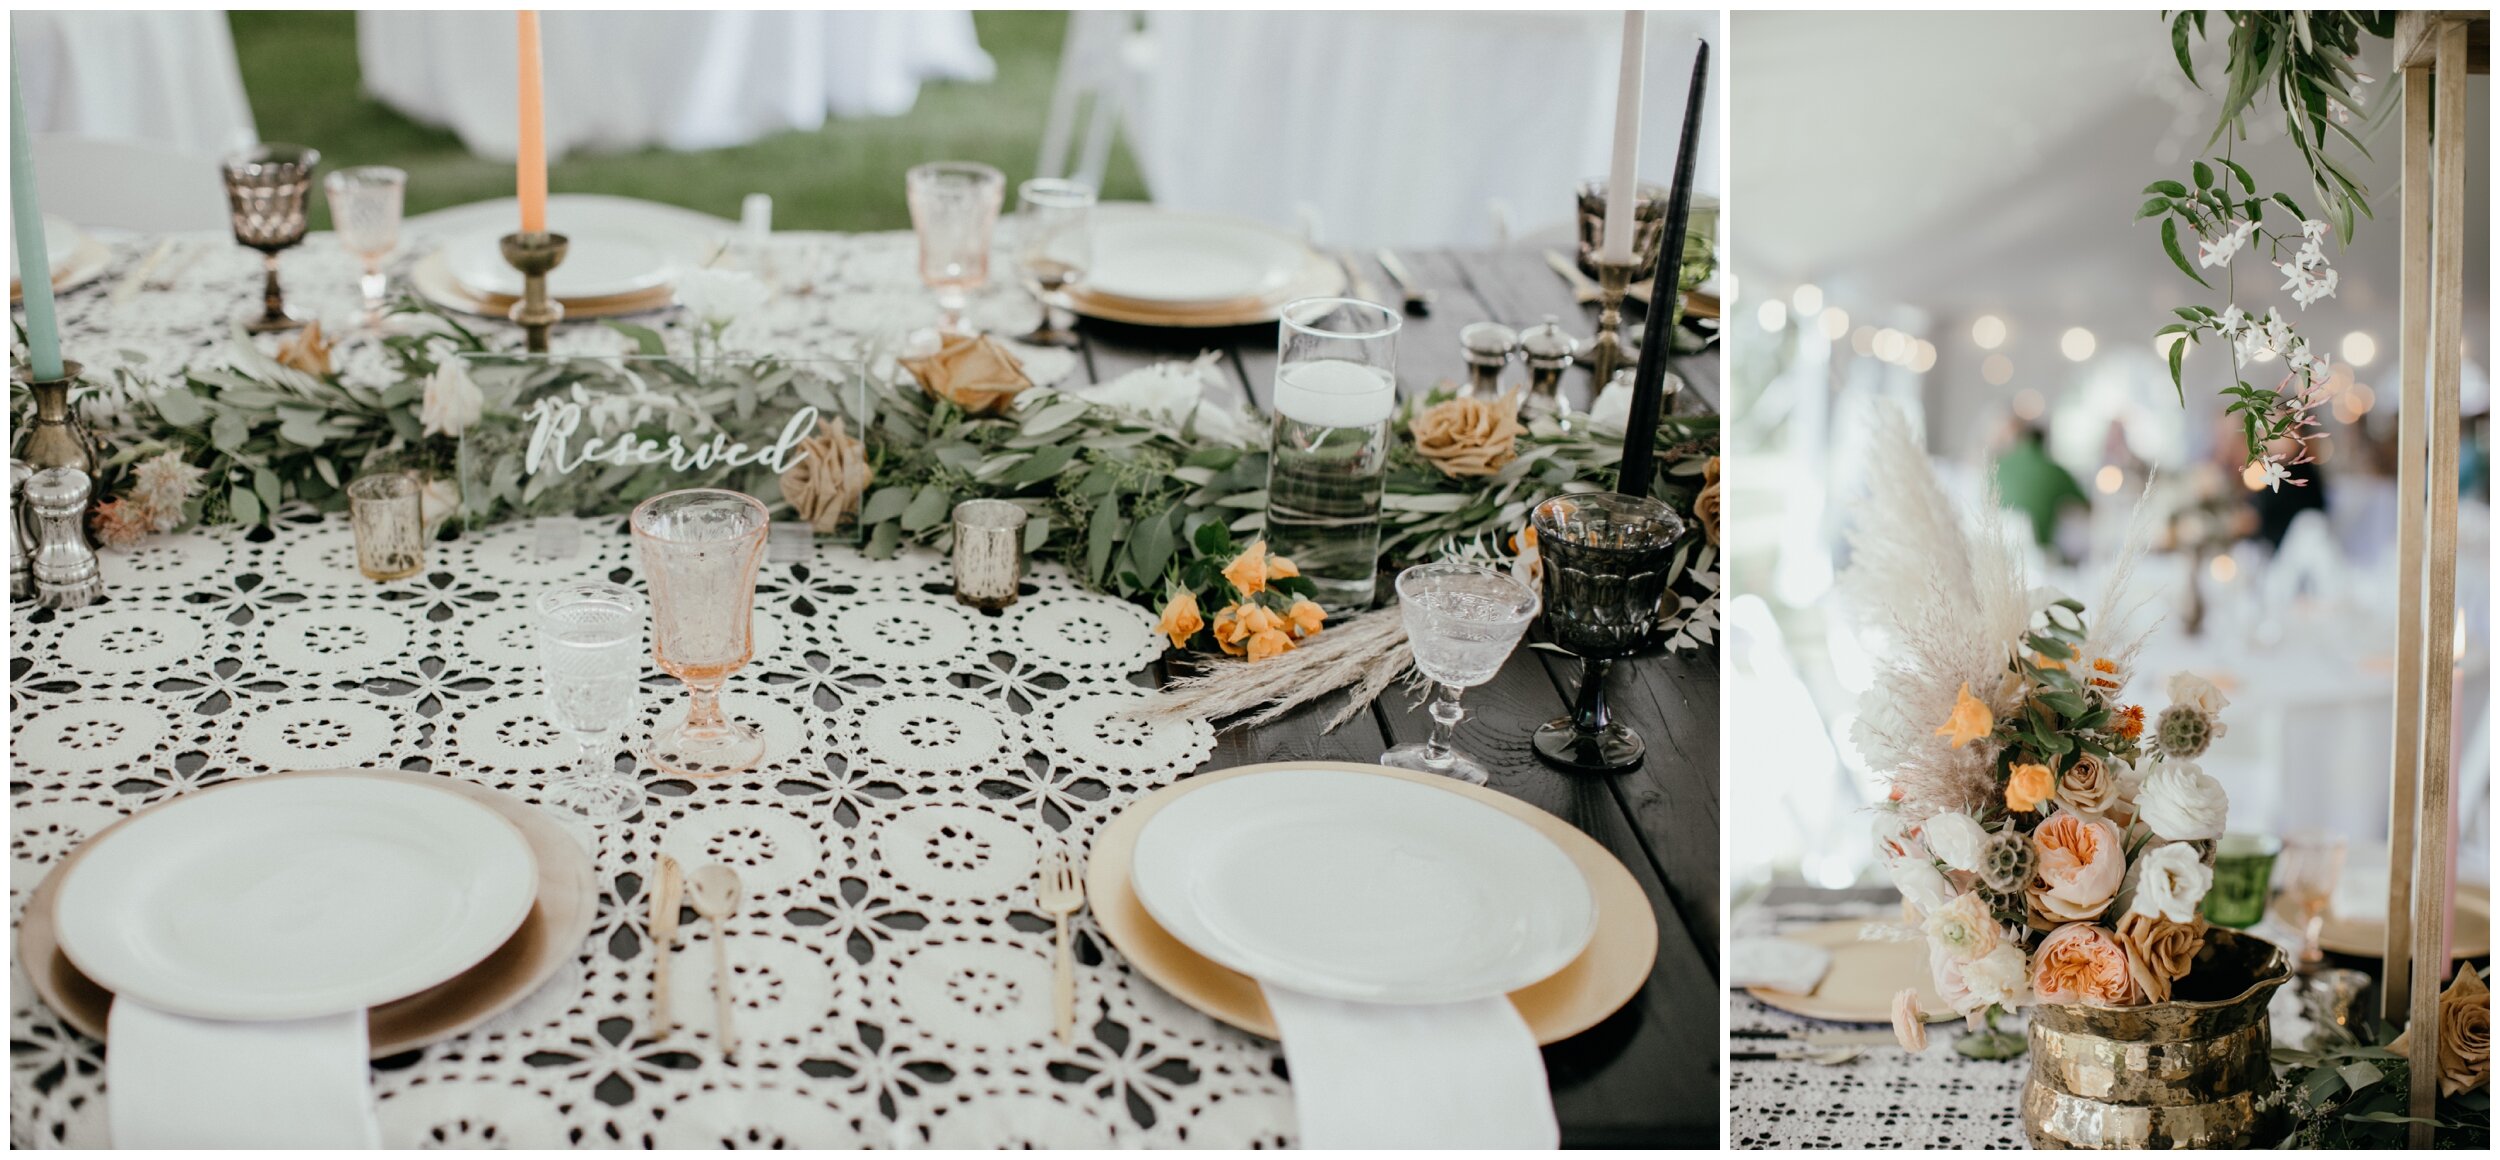 Boho, 70's inspired wedding table center pieces at Minnesota backyard wedding 